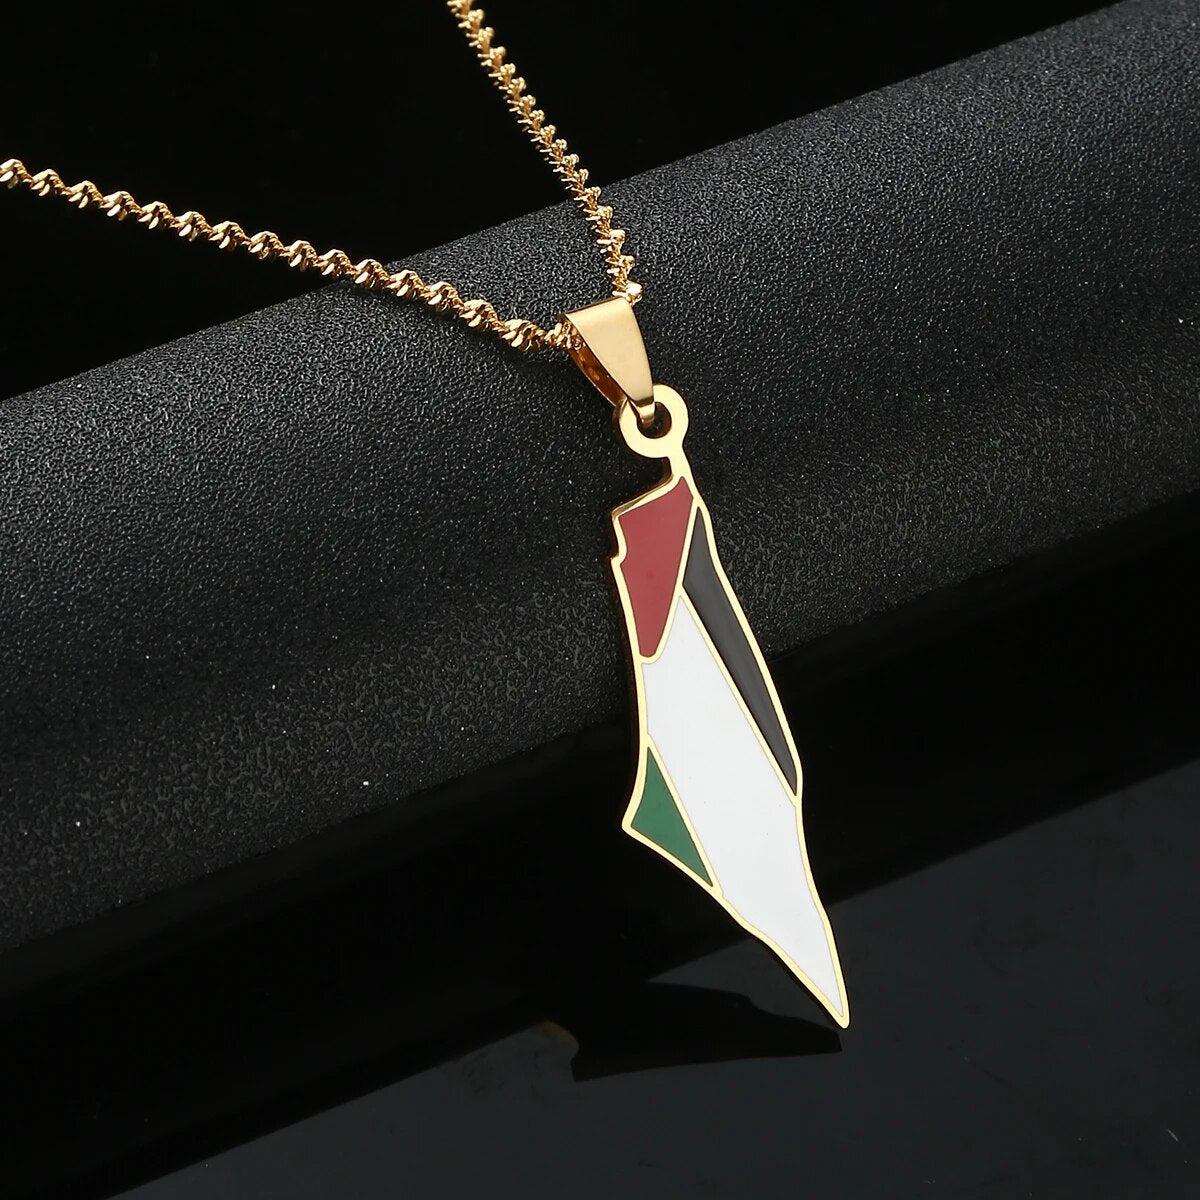 Palestine Flag Pin – Project Palestine